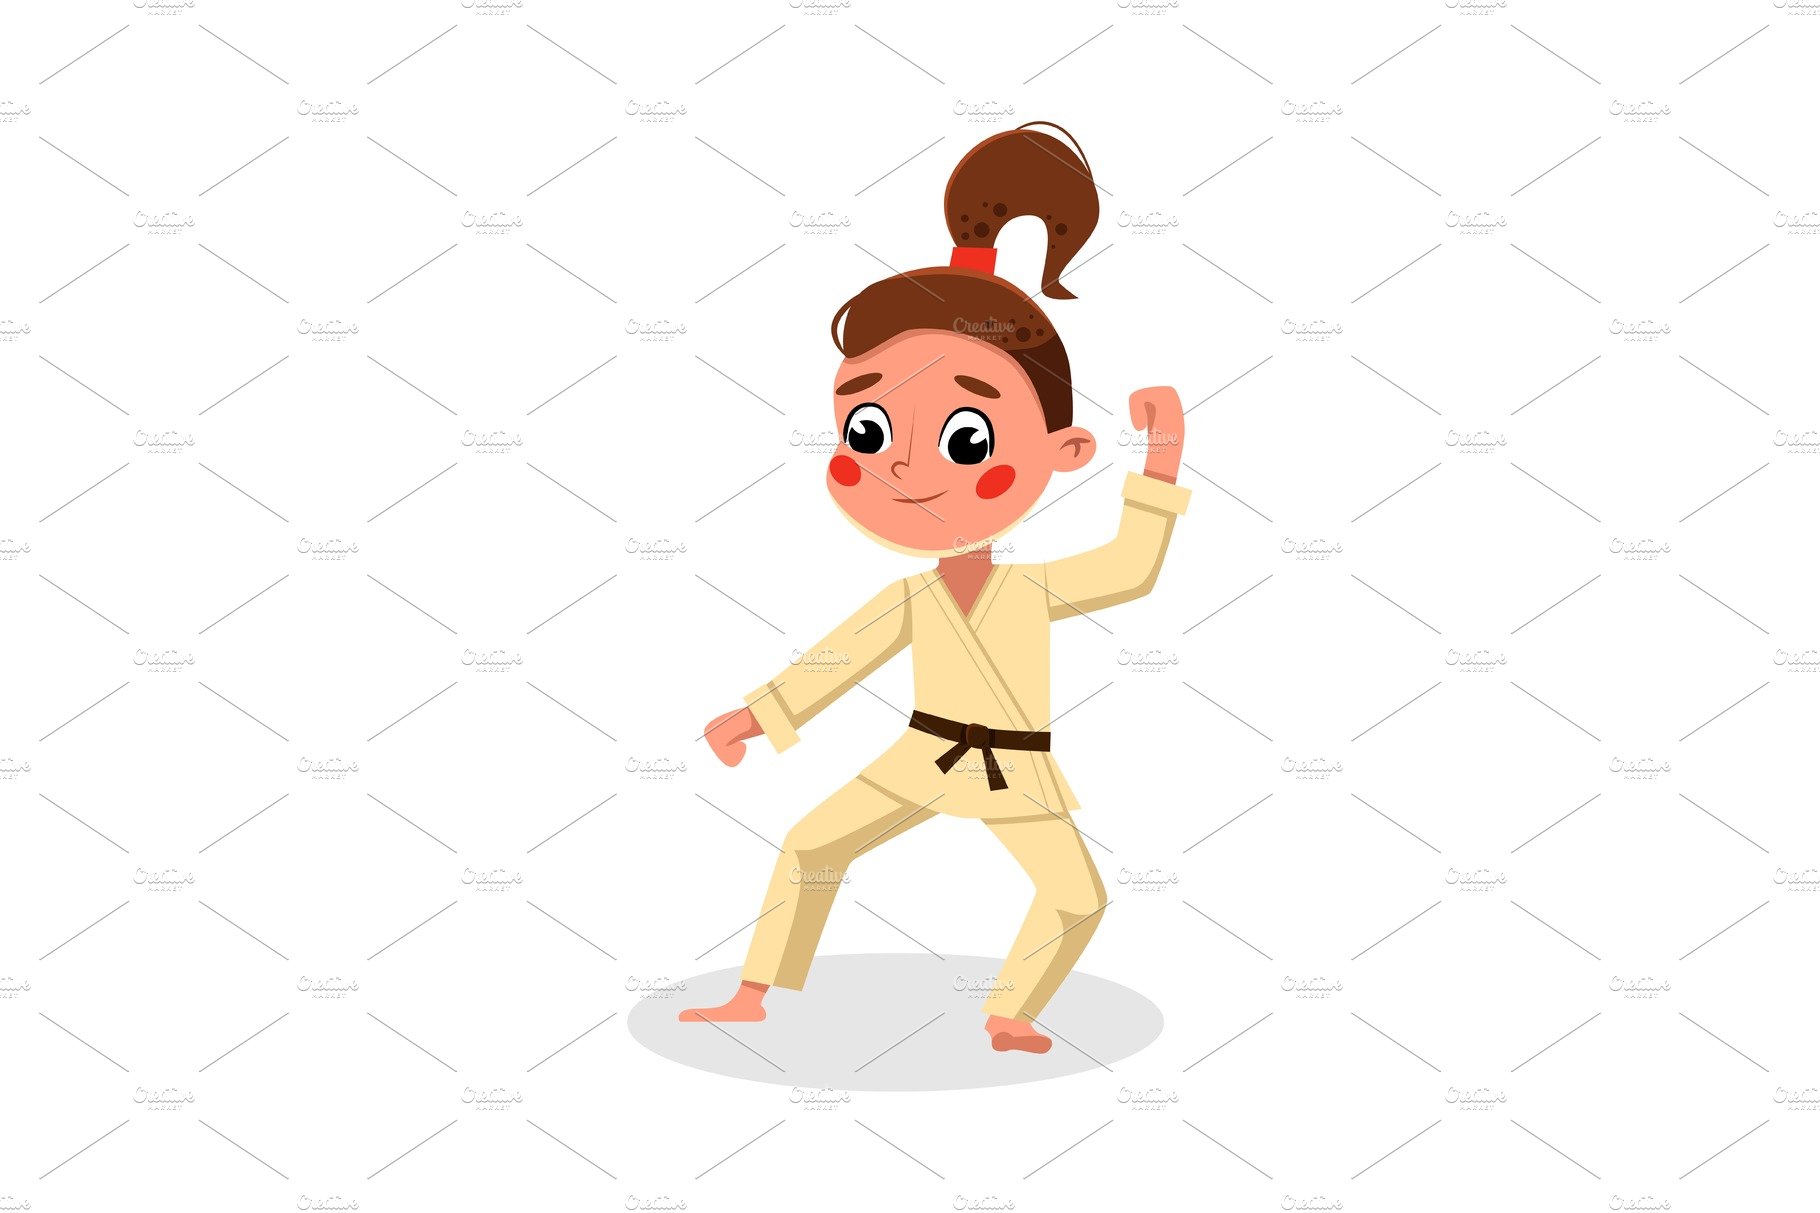 Girl Athlete Practicing Karate, Kid cover image.